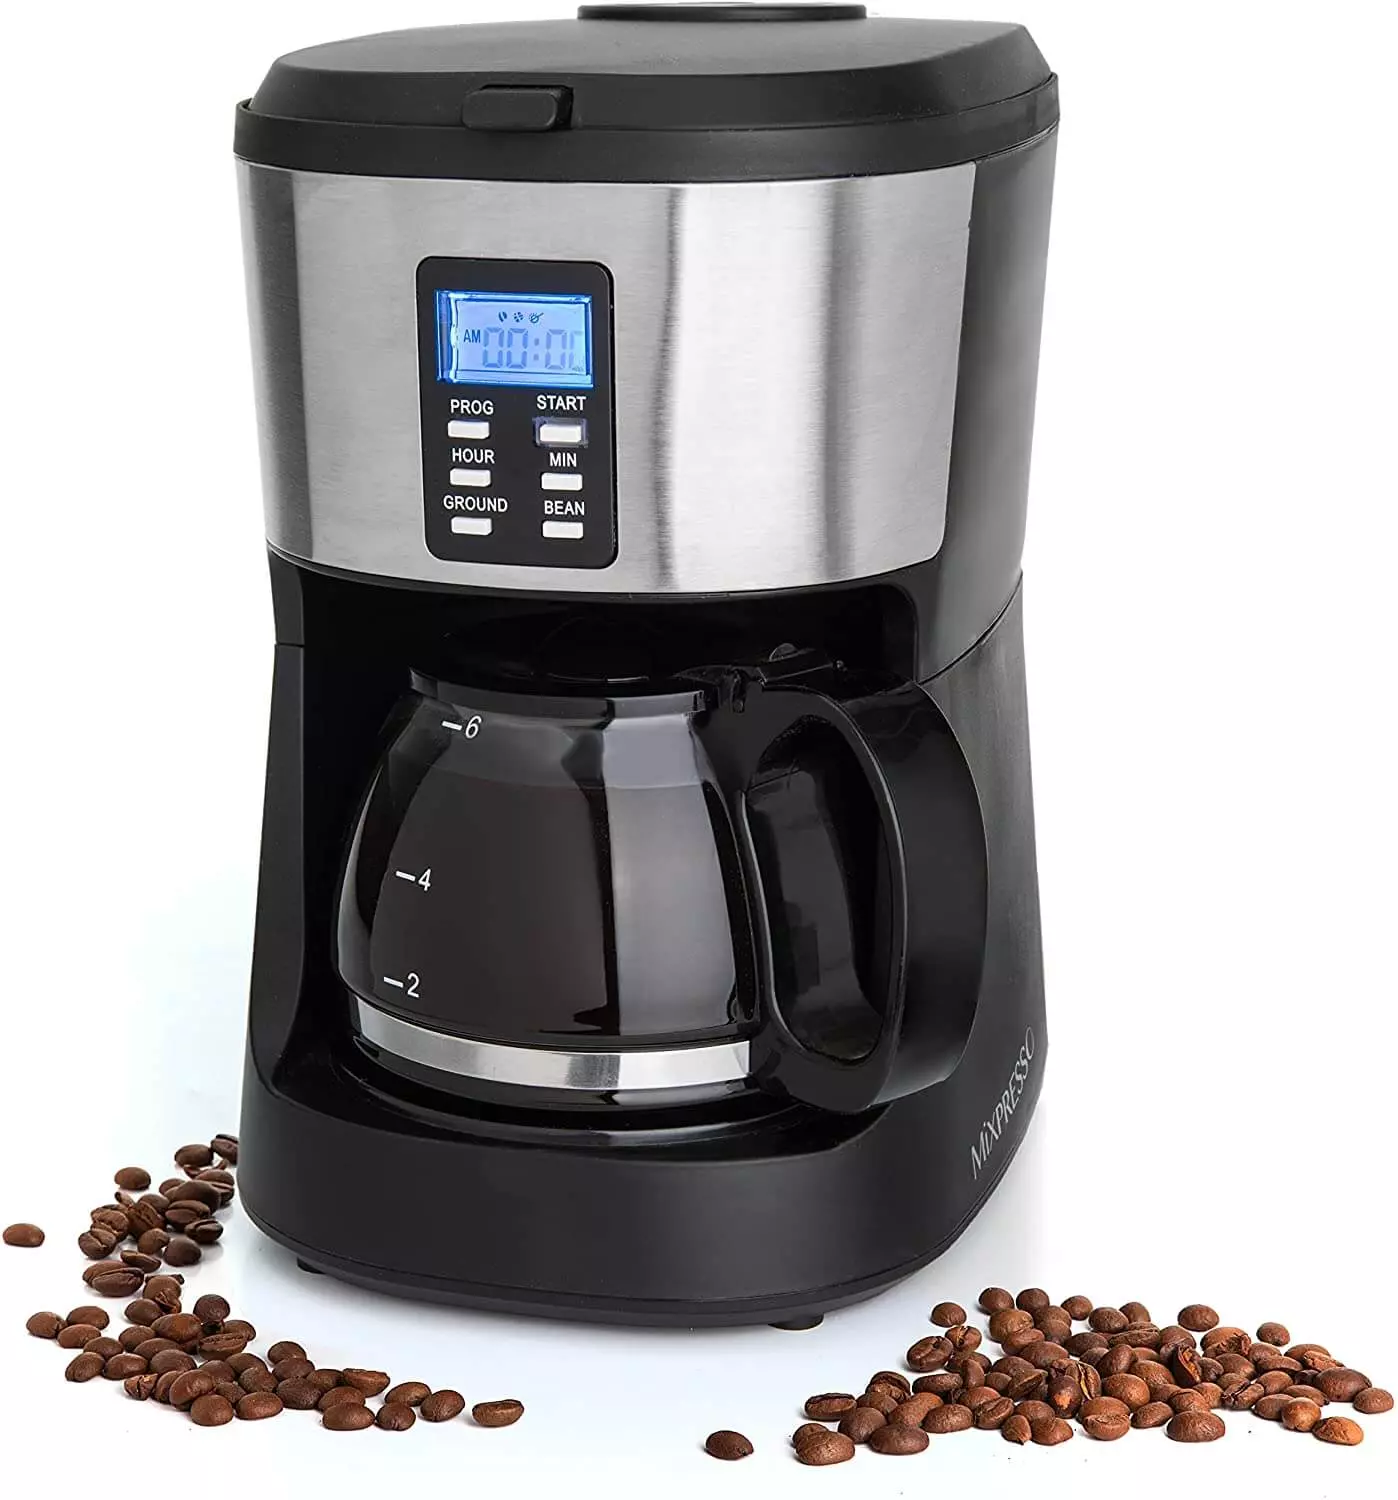 https://www.momjunction.com/wp-content/uploads/product-images/mixpresso-5-cup-drip-coffee-maker_afl2762.jpg.webp